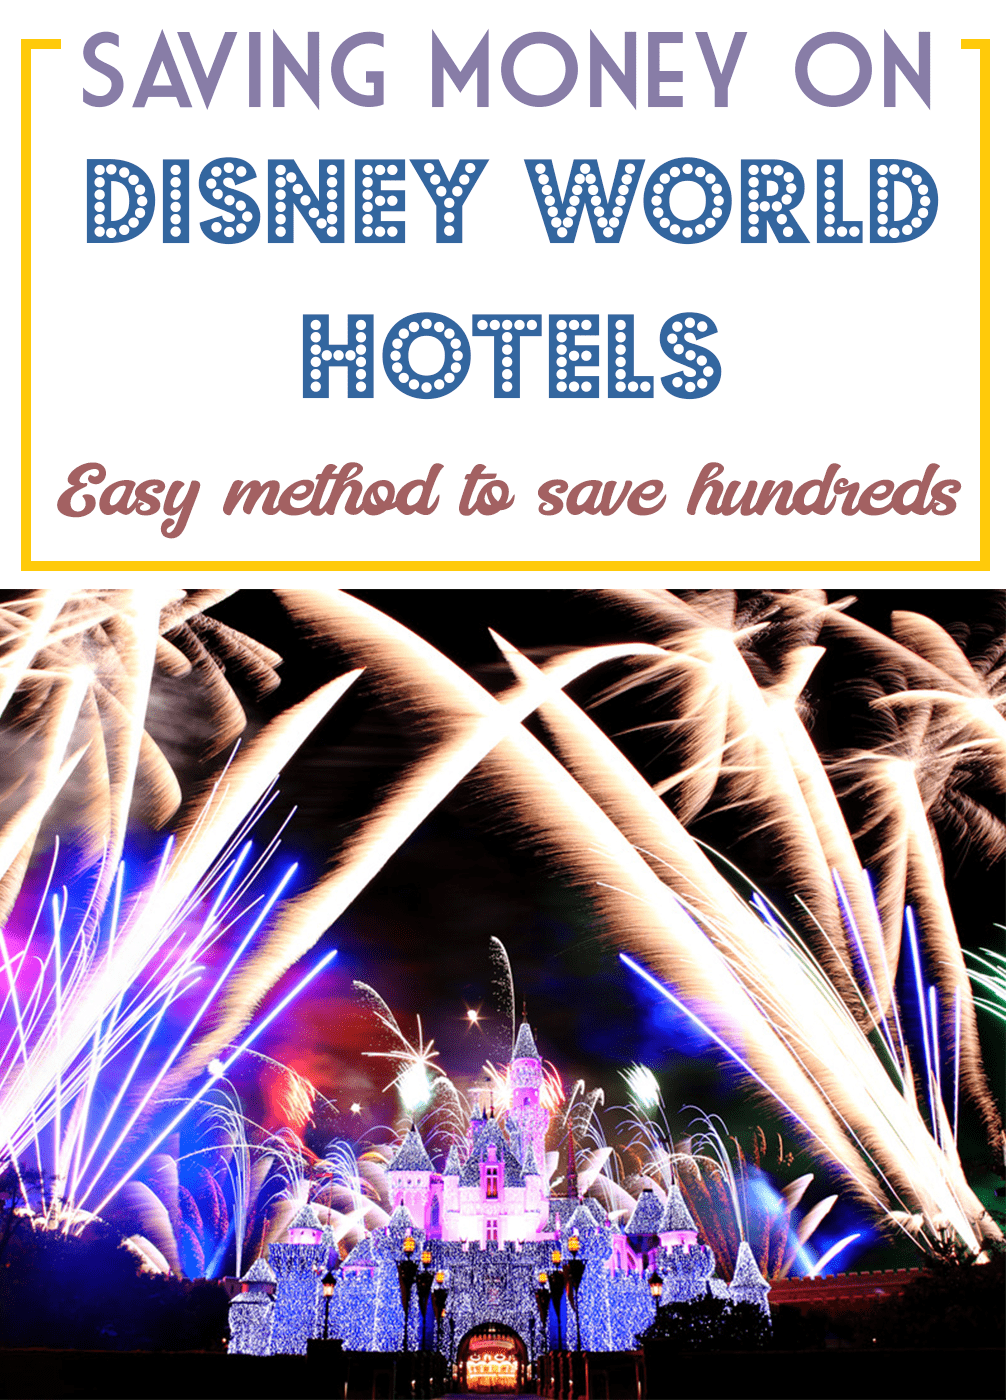 Disney Hotel Discounts and Room Hacks